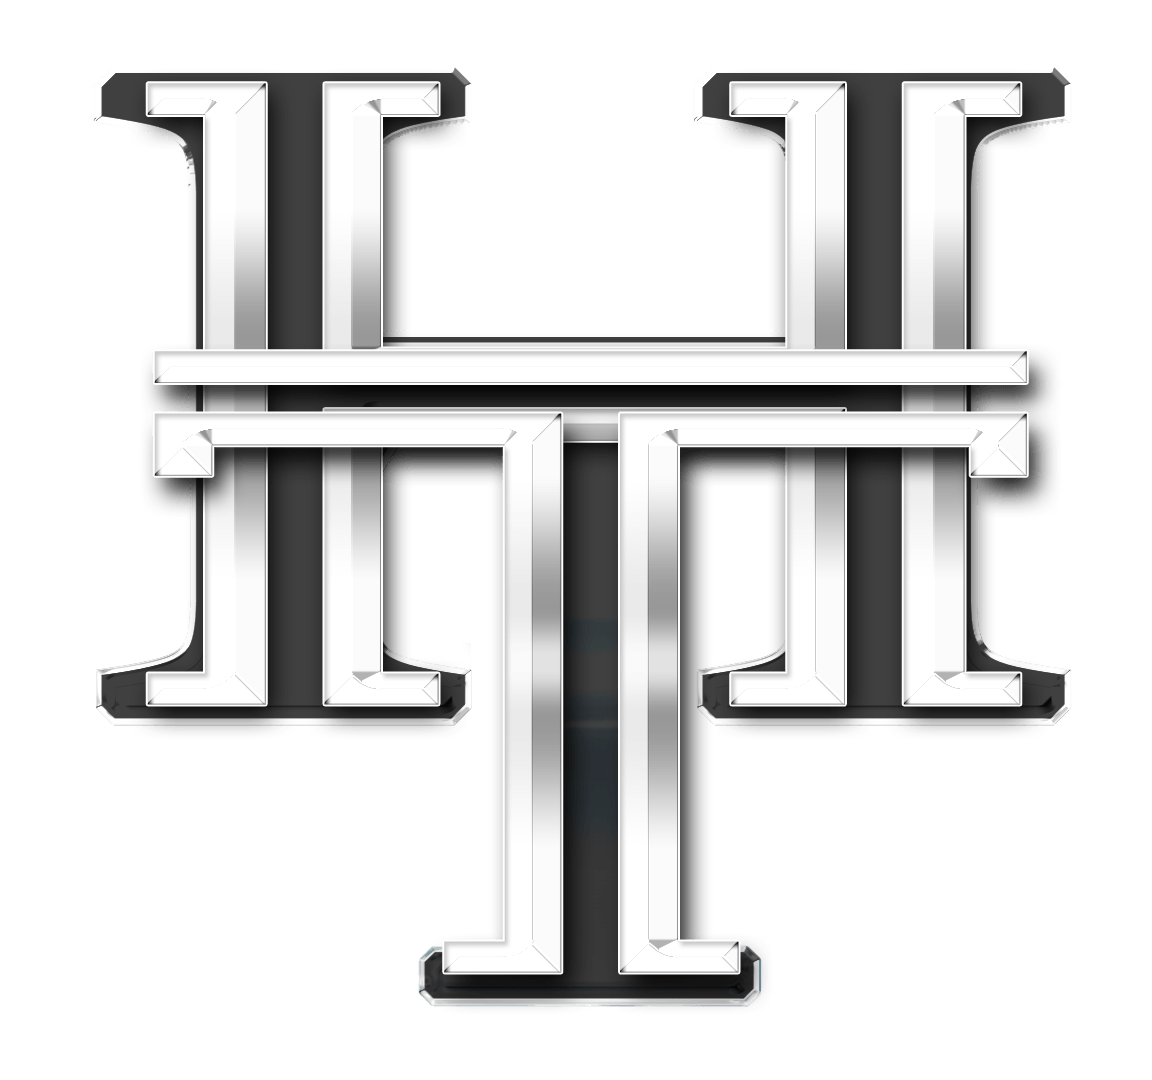 Логотип h. Логотип с буквой h. Логотип TMR. Красивая буква н для логотипа.